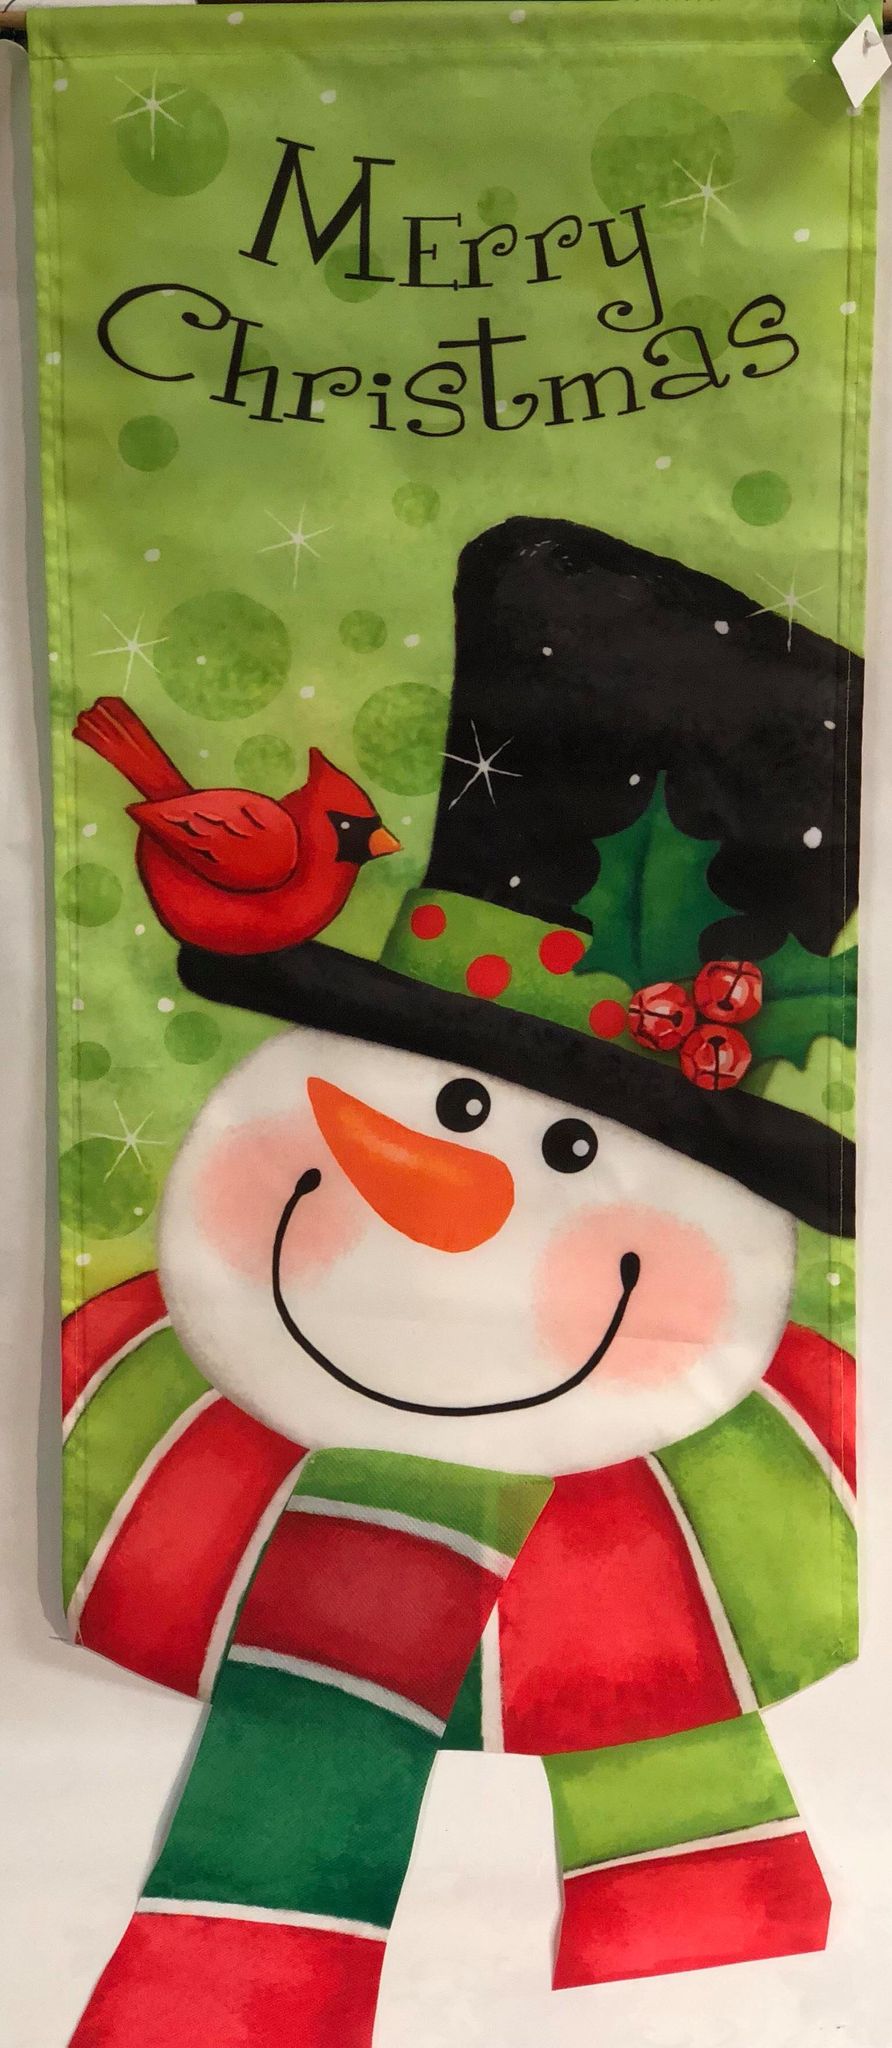 Snowman banner- "Merry Christmas"